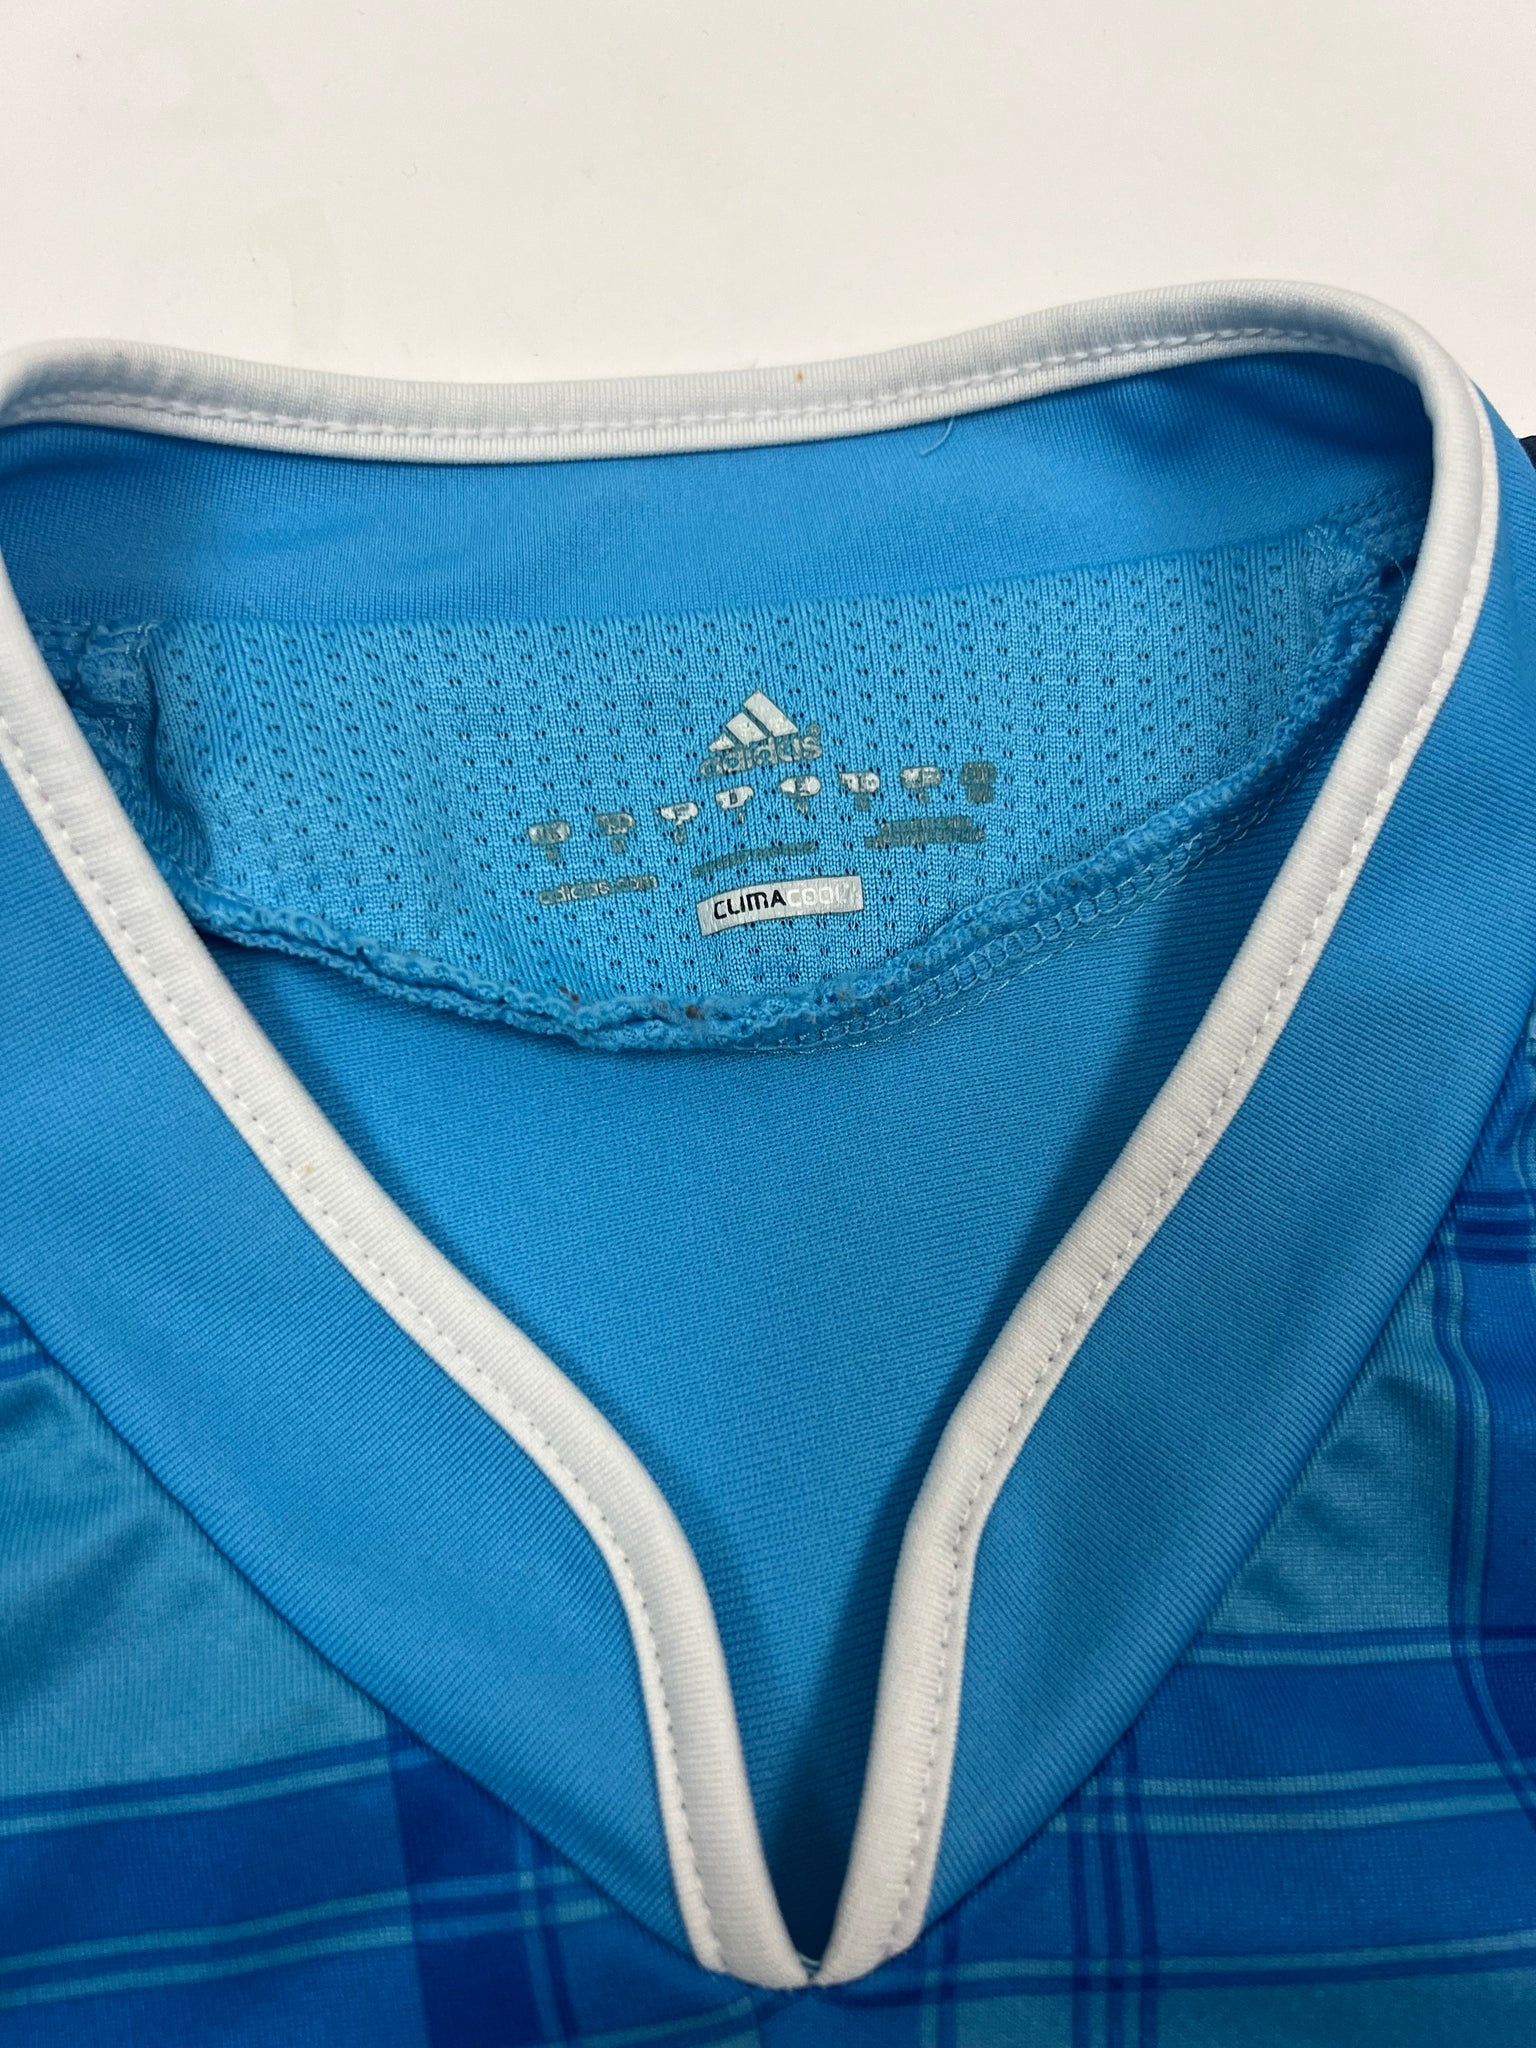 Adidas Olympique De Marseille Jersey (M)